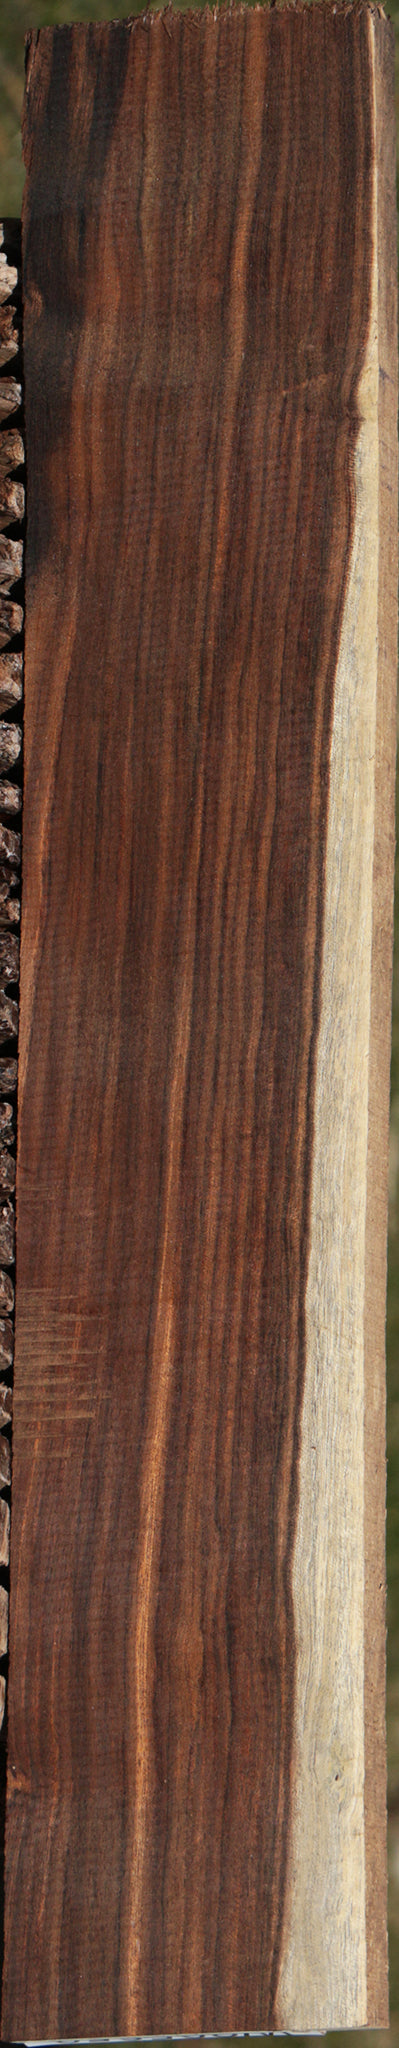 Leadwood Micro Lumber